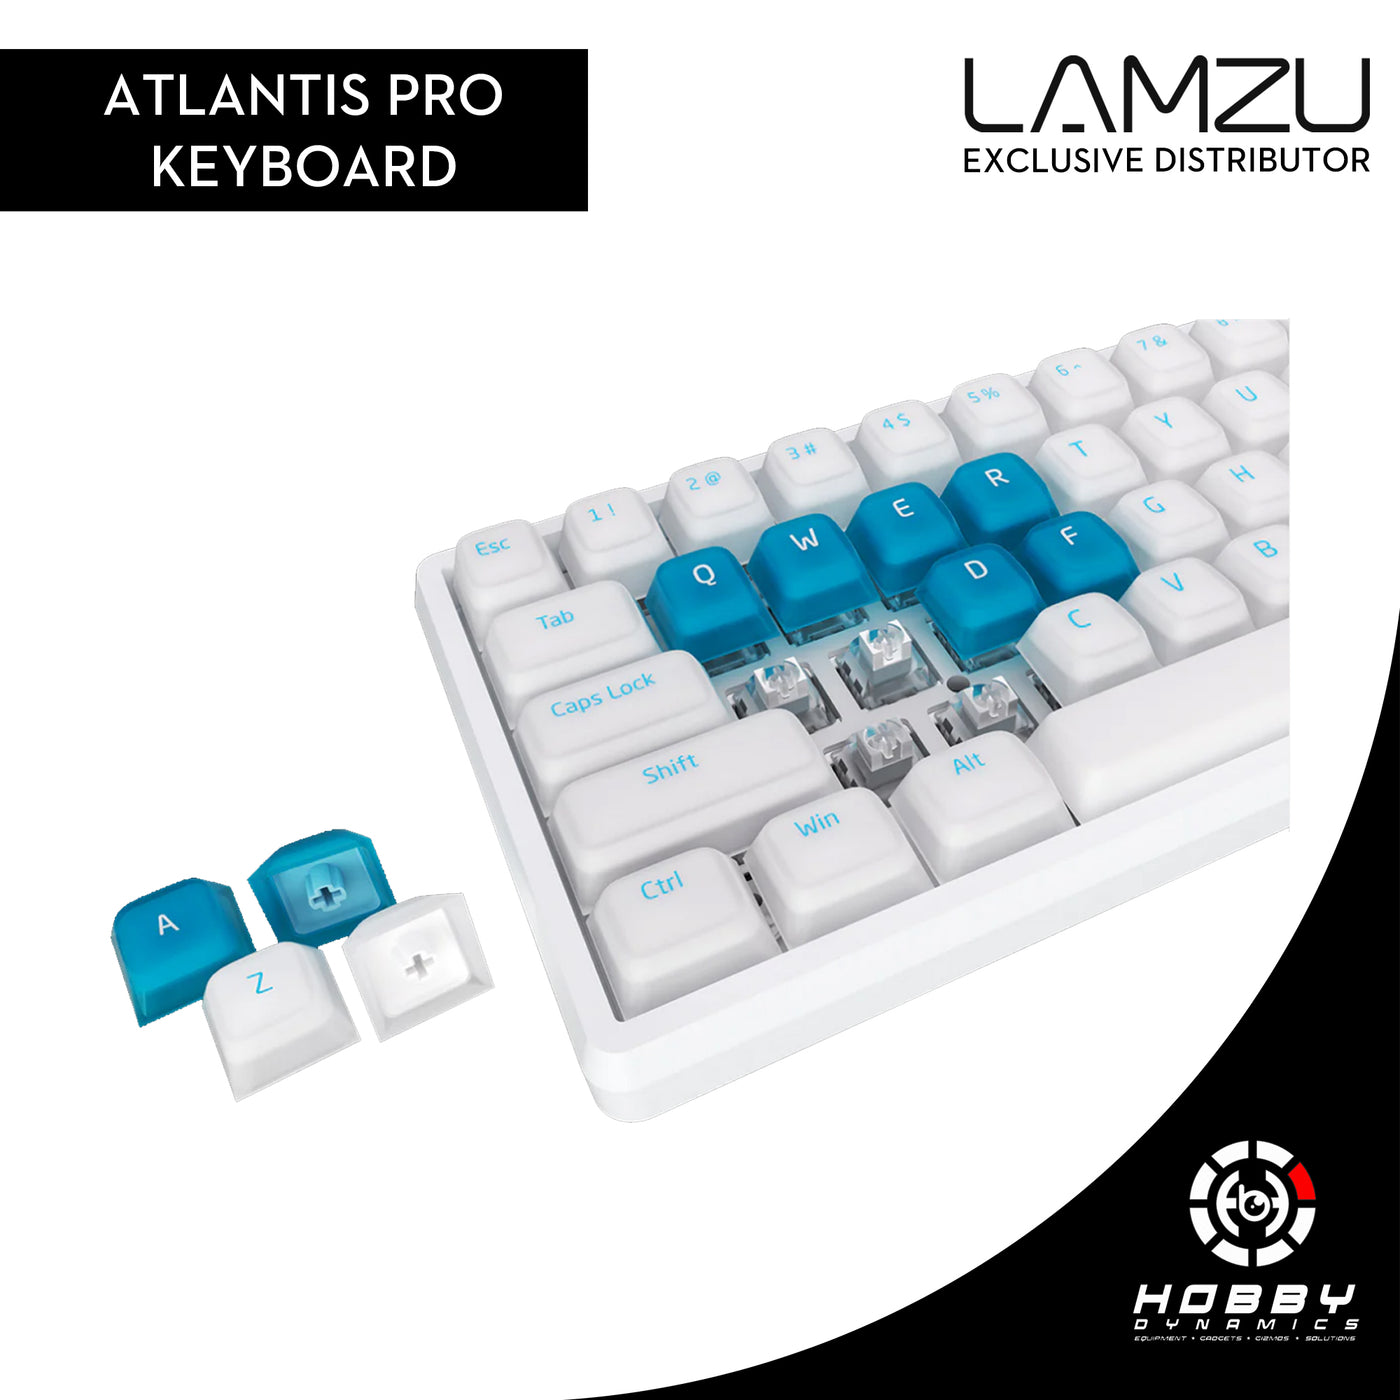 Lamzu Atlantis Pro Keyboard